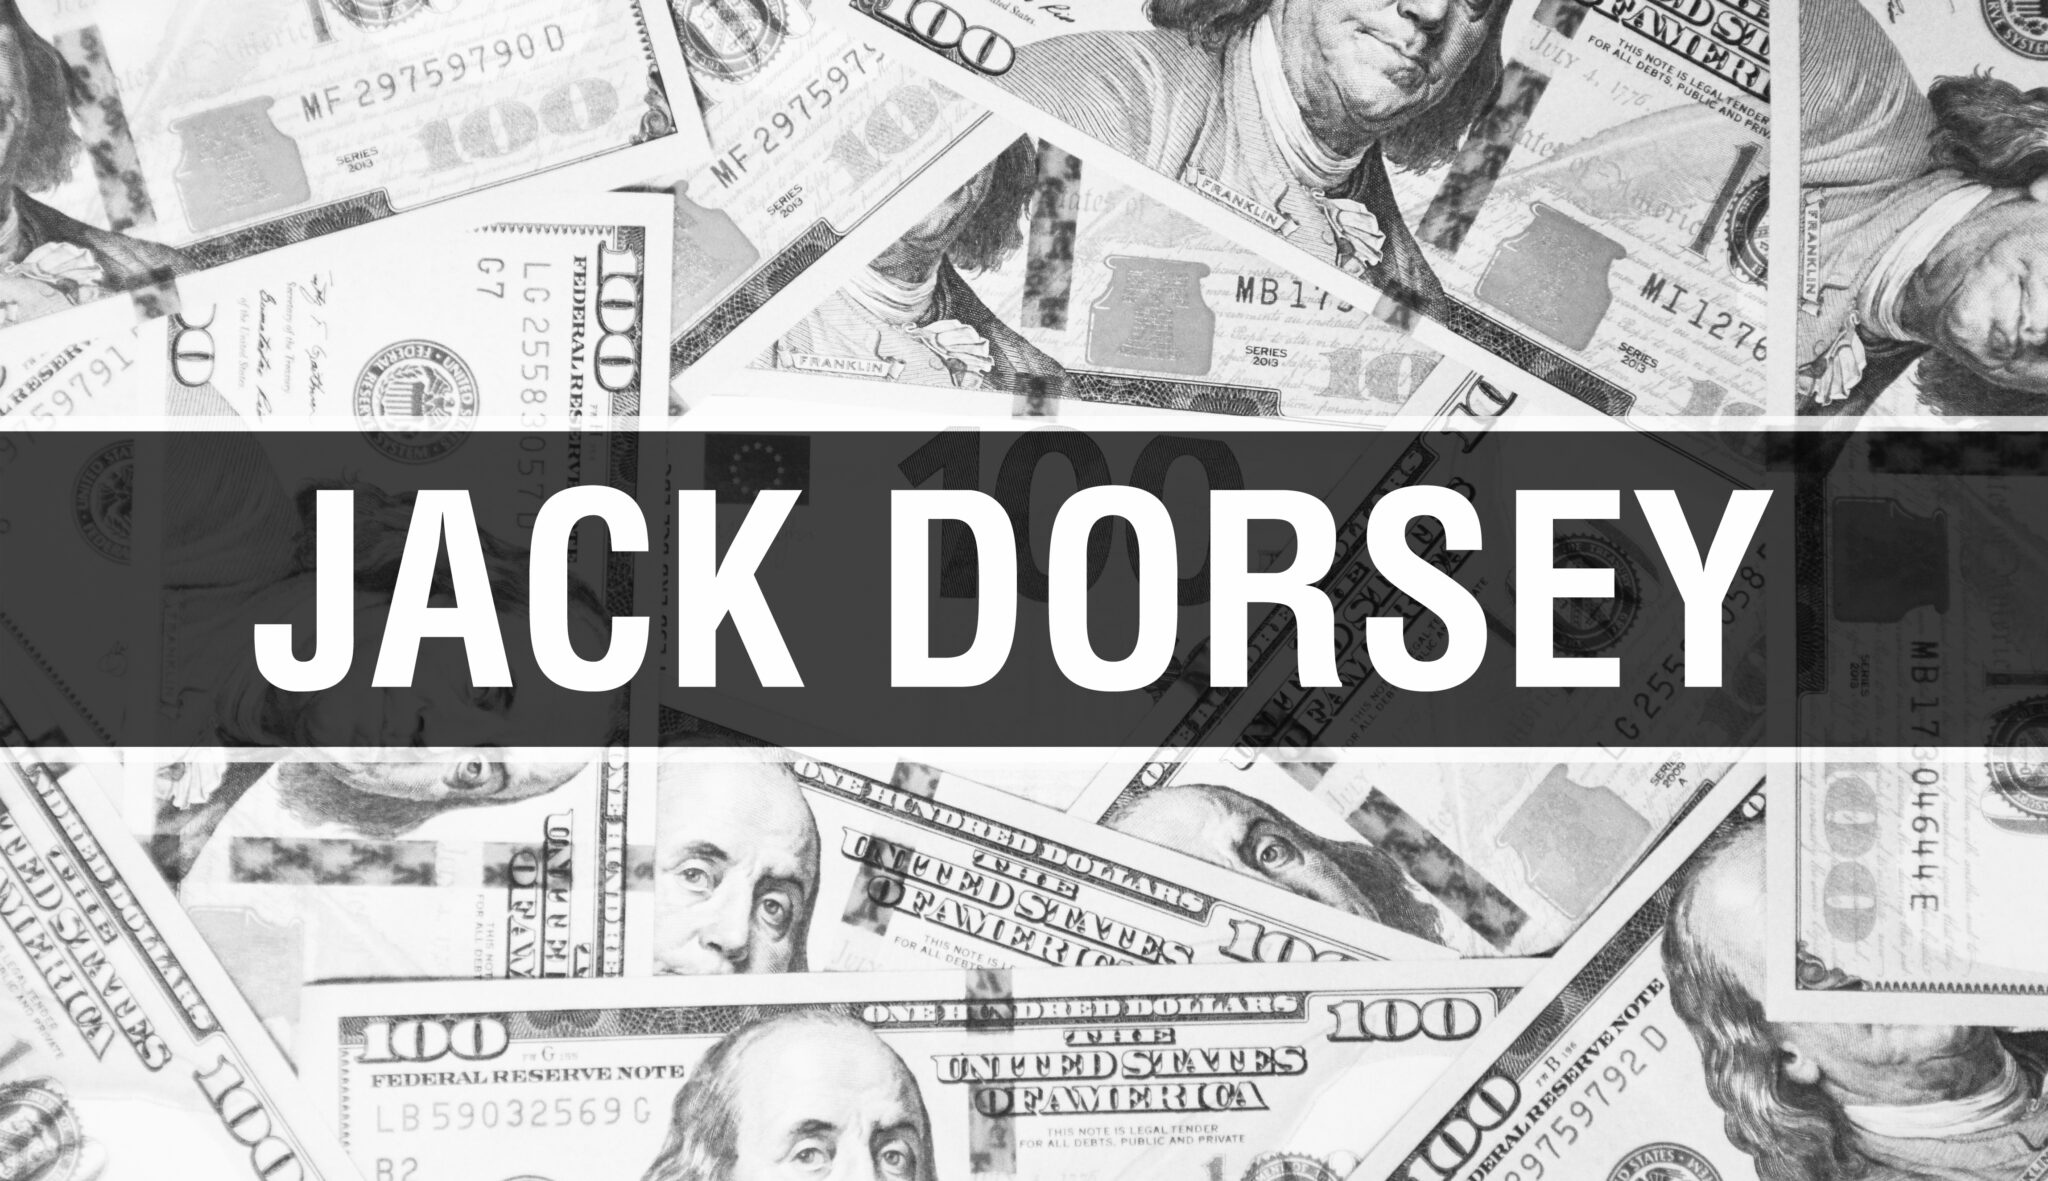 Jack Dorsey text Concept. American Dollars Cash Money,3D rendering. Billionaire Jack Dorsey at Dollar Banknote. Top world Financial billionaire investor - London,3 May 202